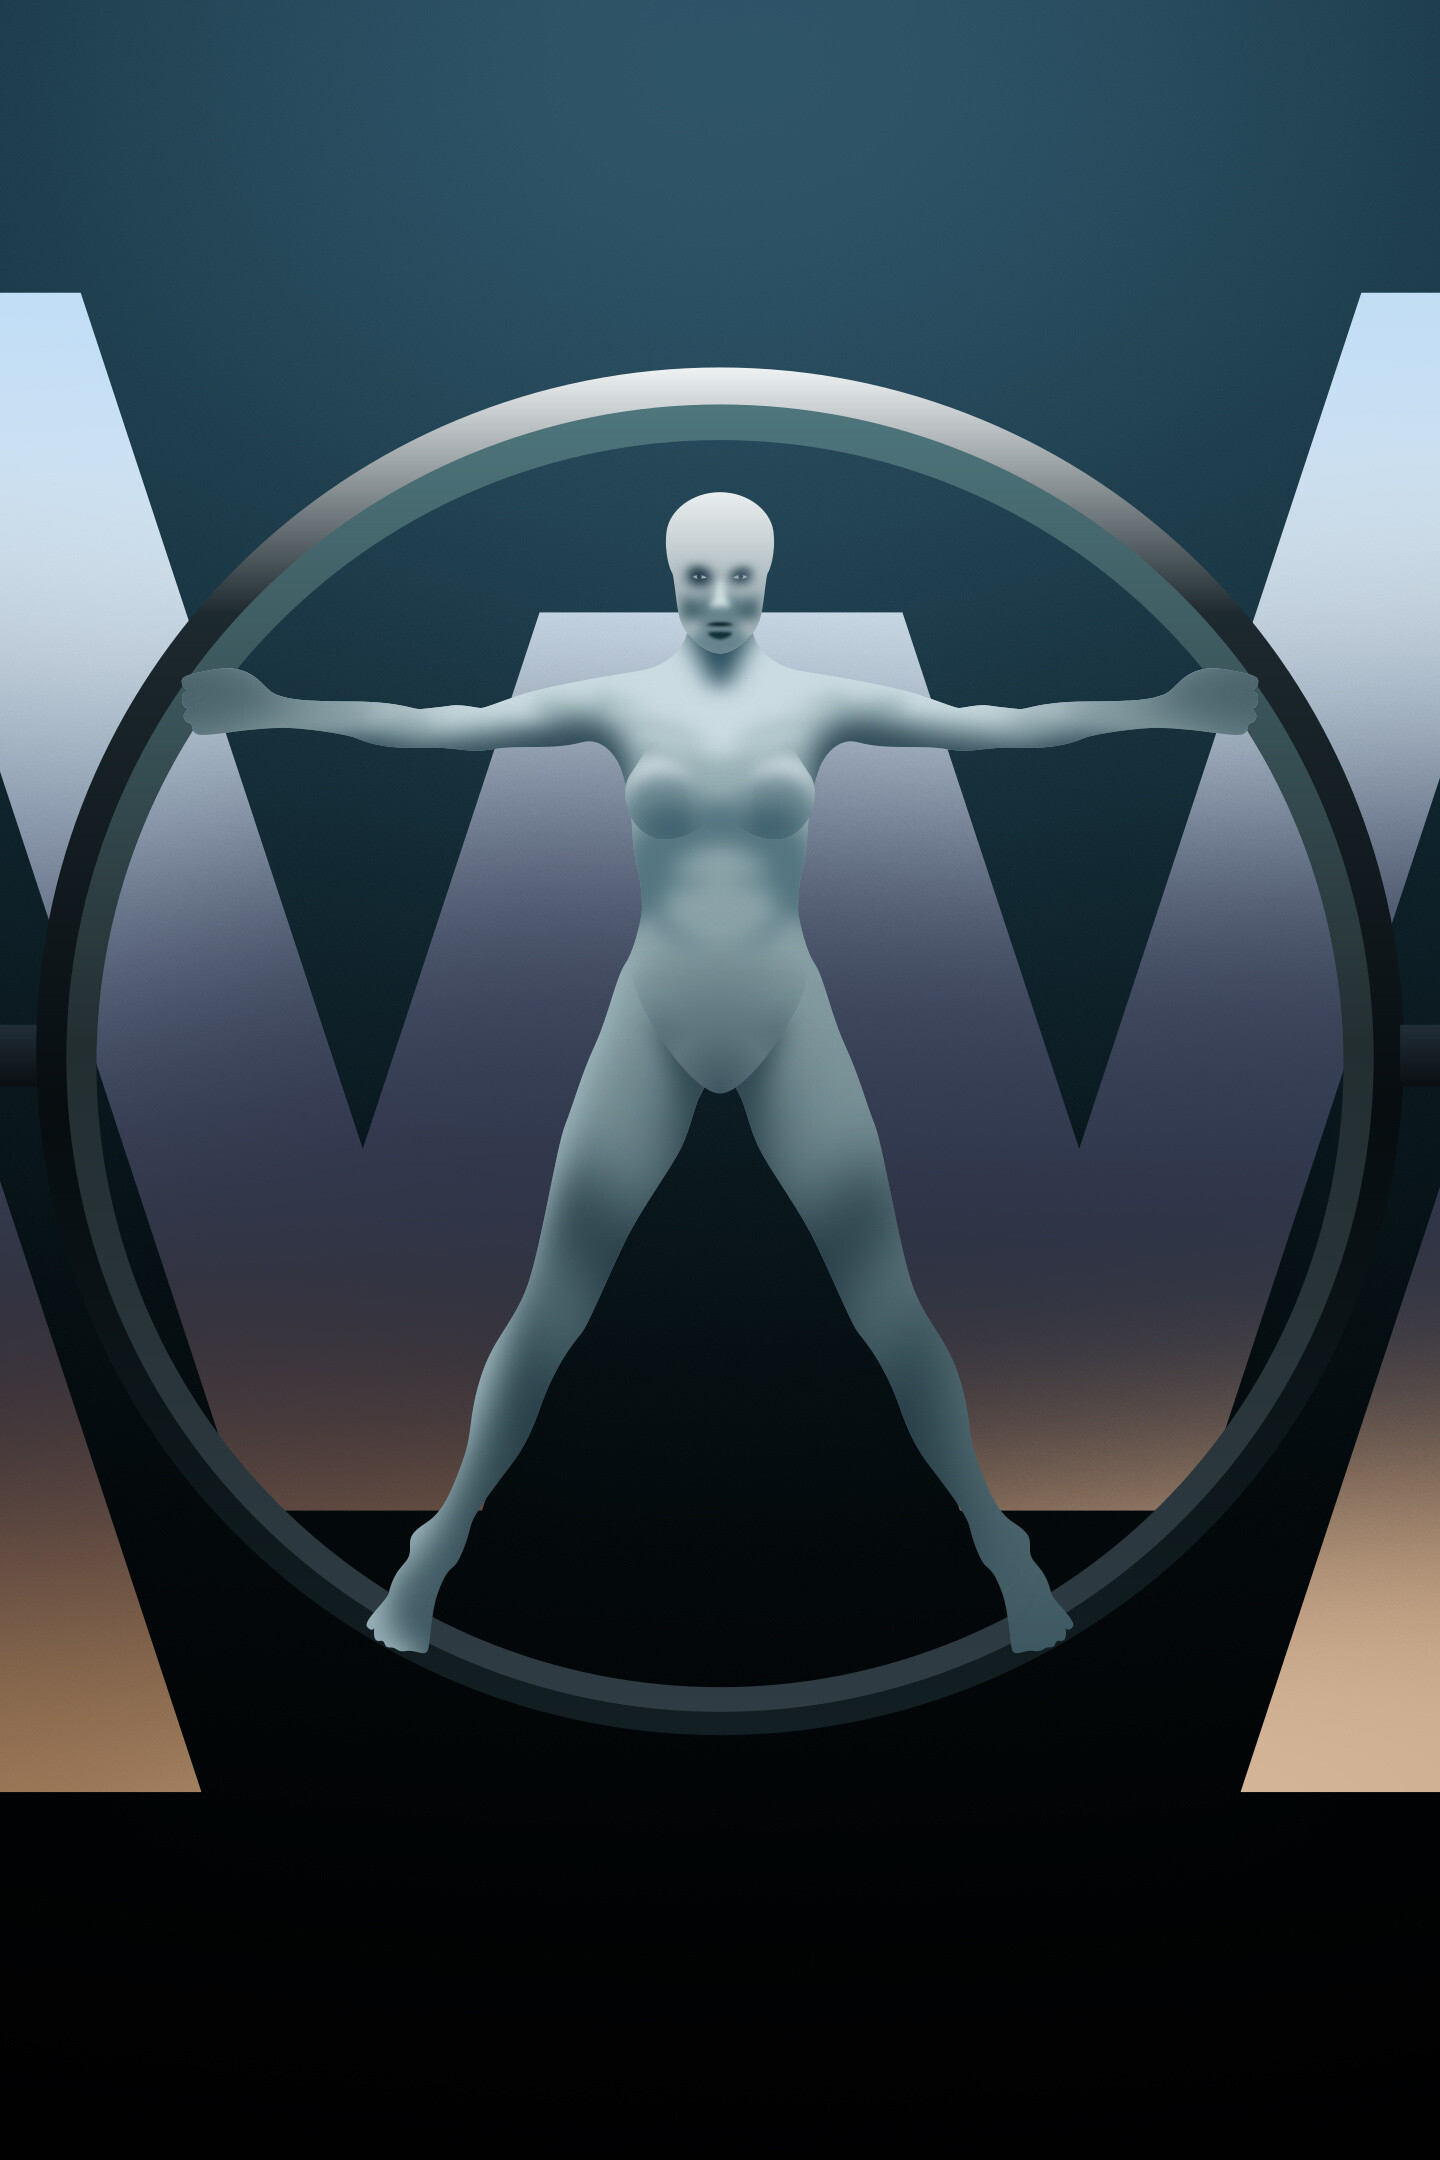 Westworld: Logo, Digital art, HBO, Android creation. 1440x2160 HD Background.